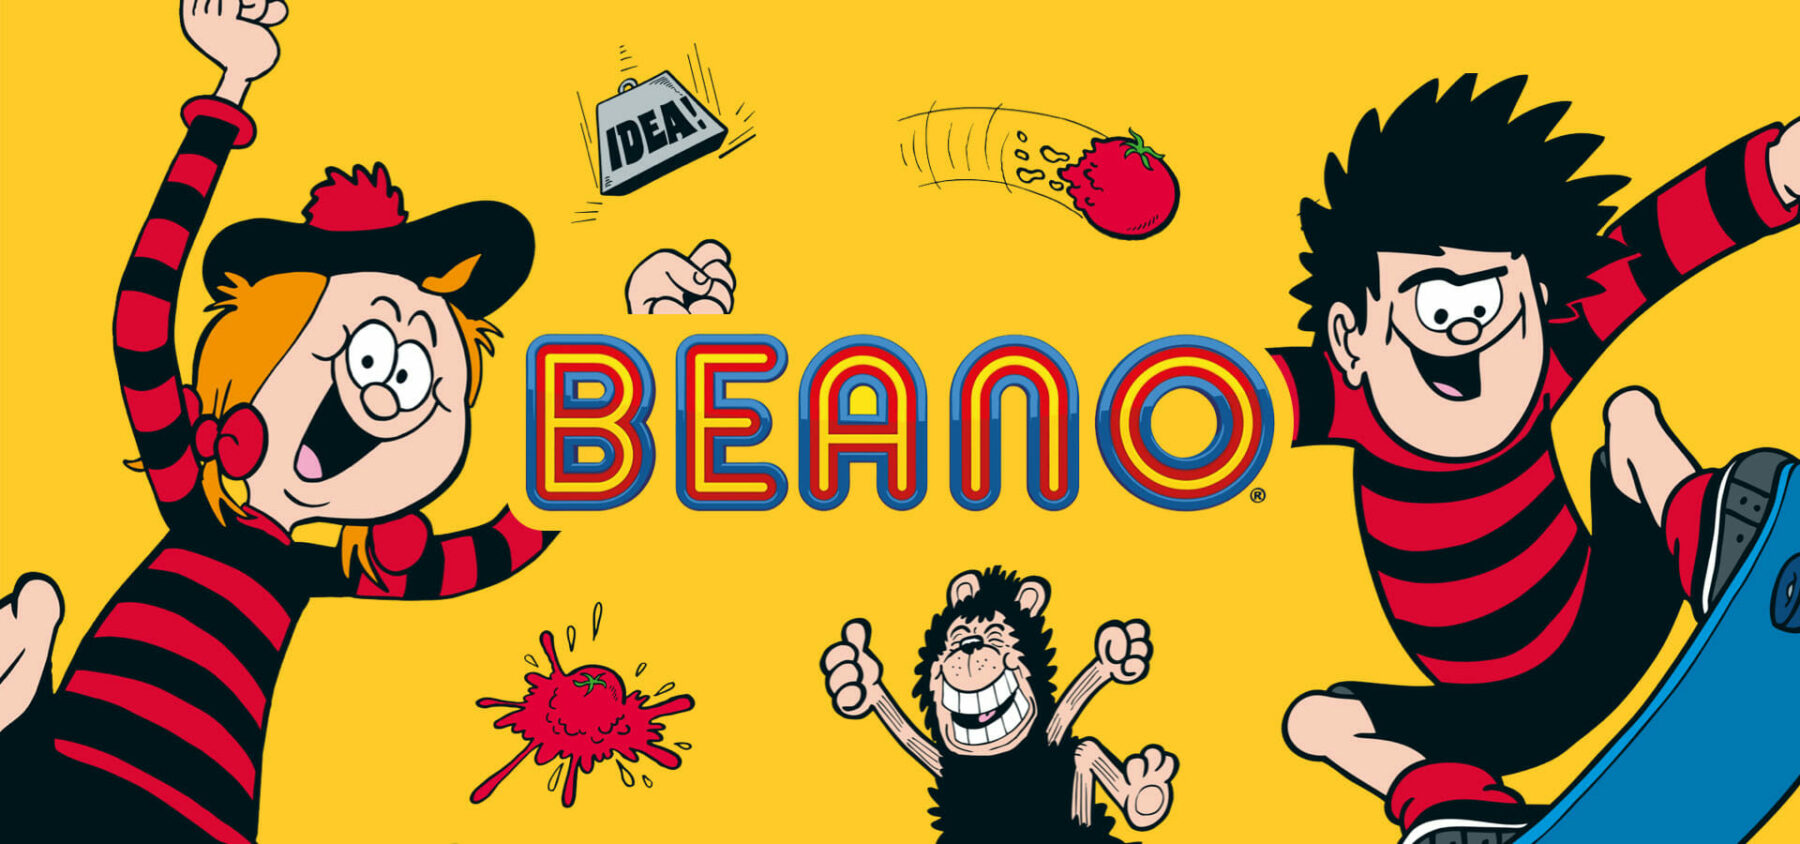 beano logo surrounded by beano characters